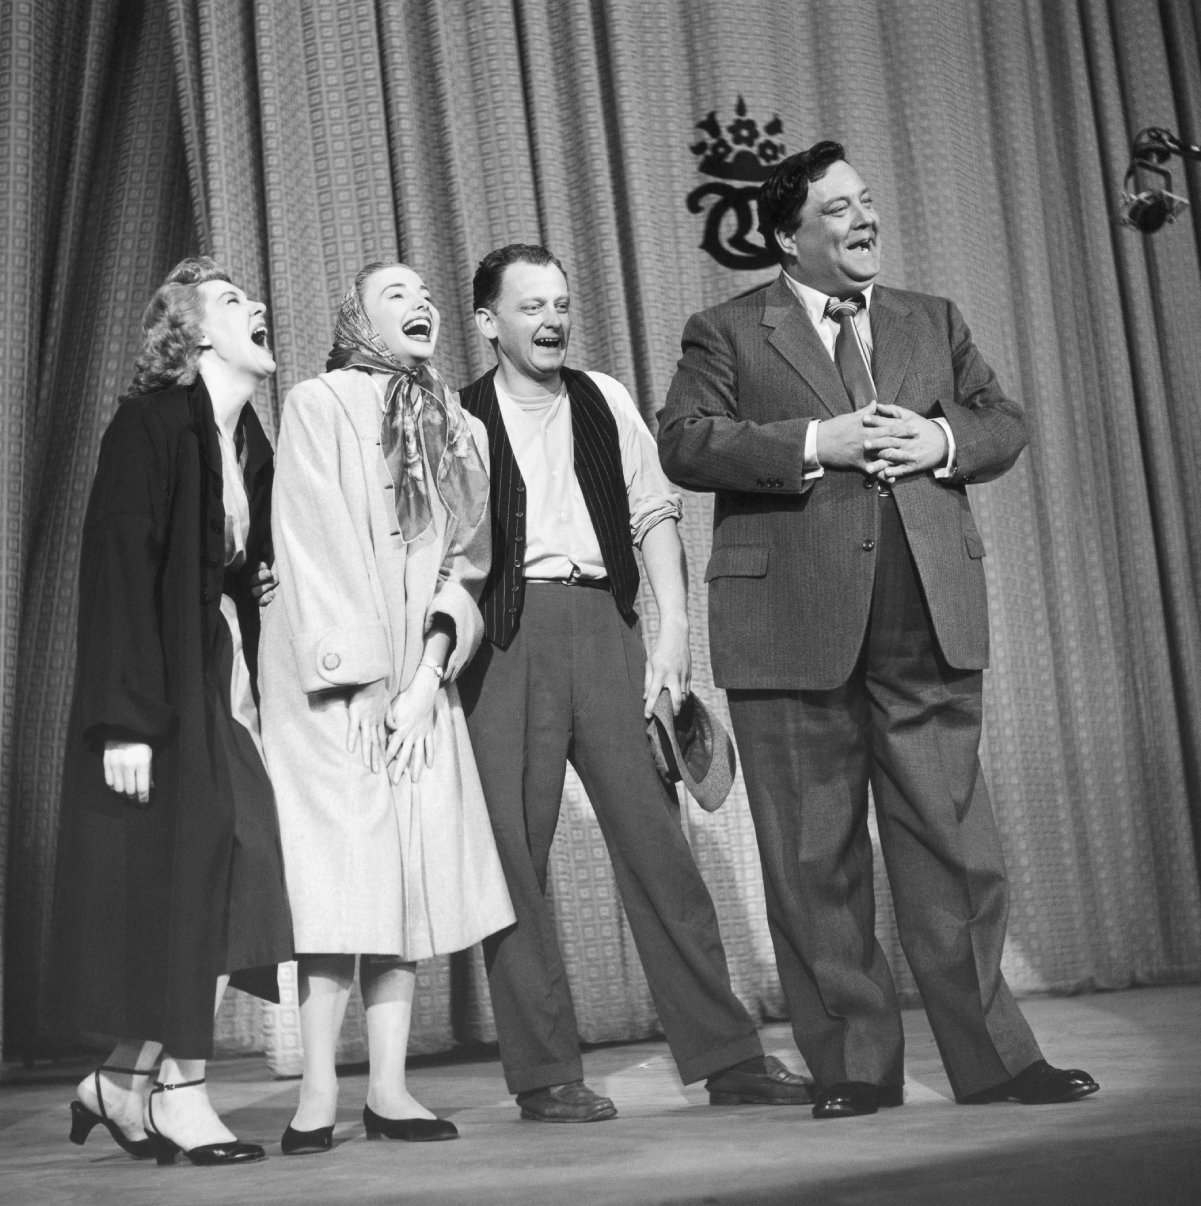 The cast of 'The Honeymooners', 1955